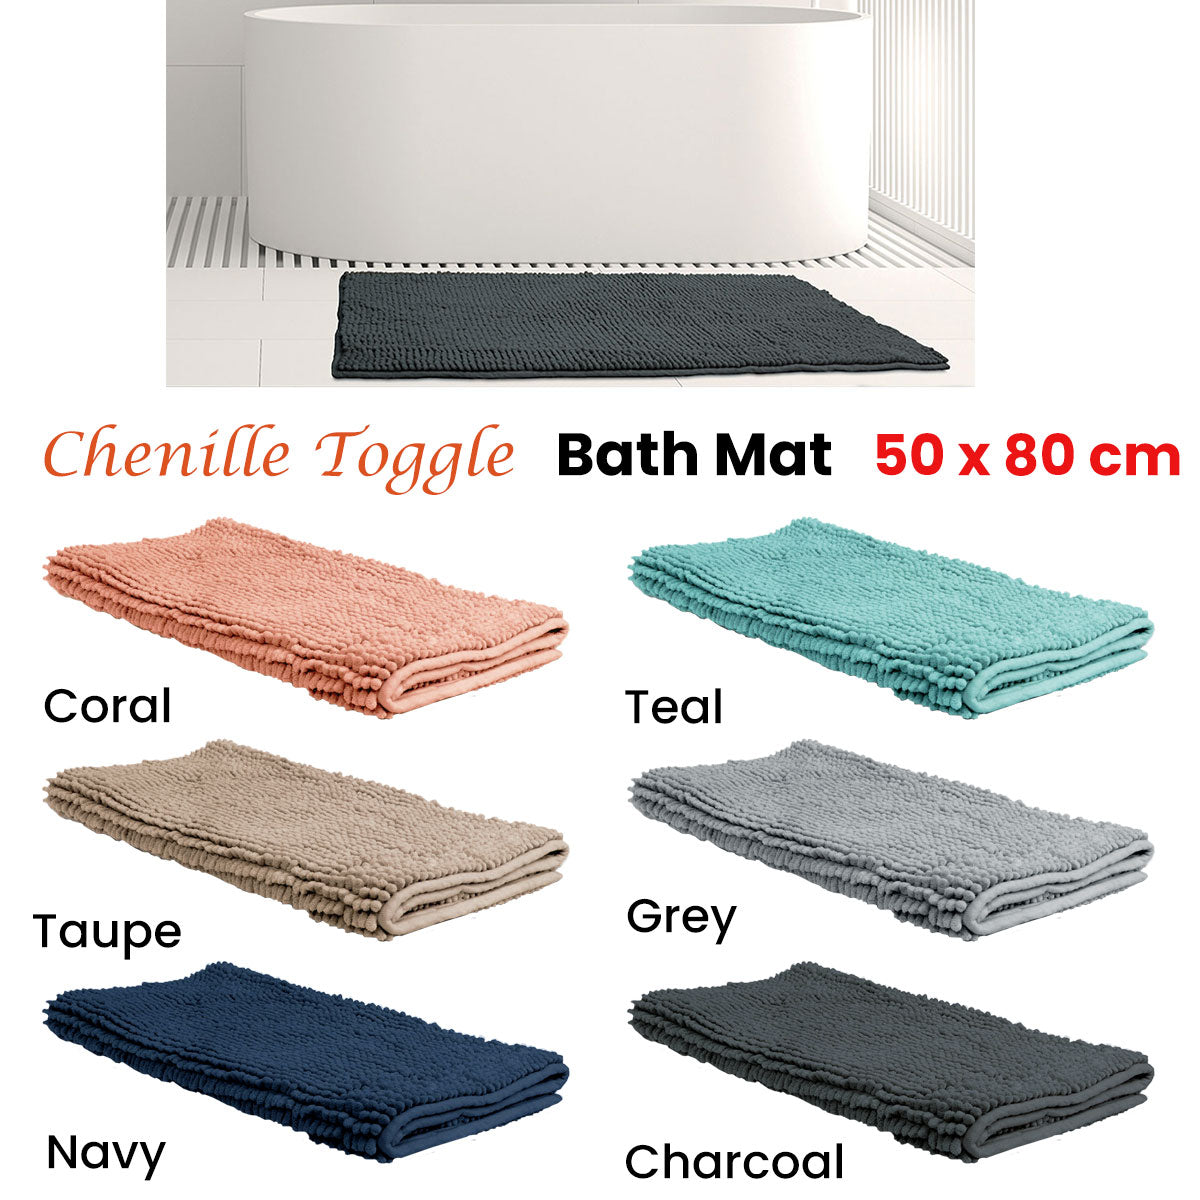 Chenille Toggle Bath Mat 50 x 80cm Charcoal - BM House & Garden